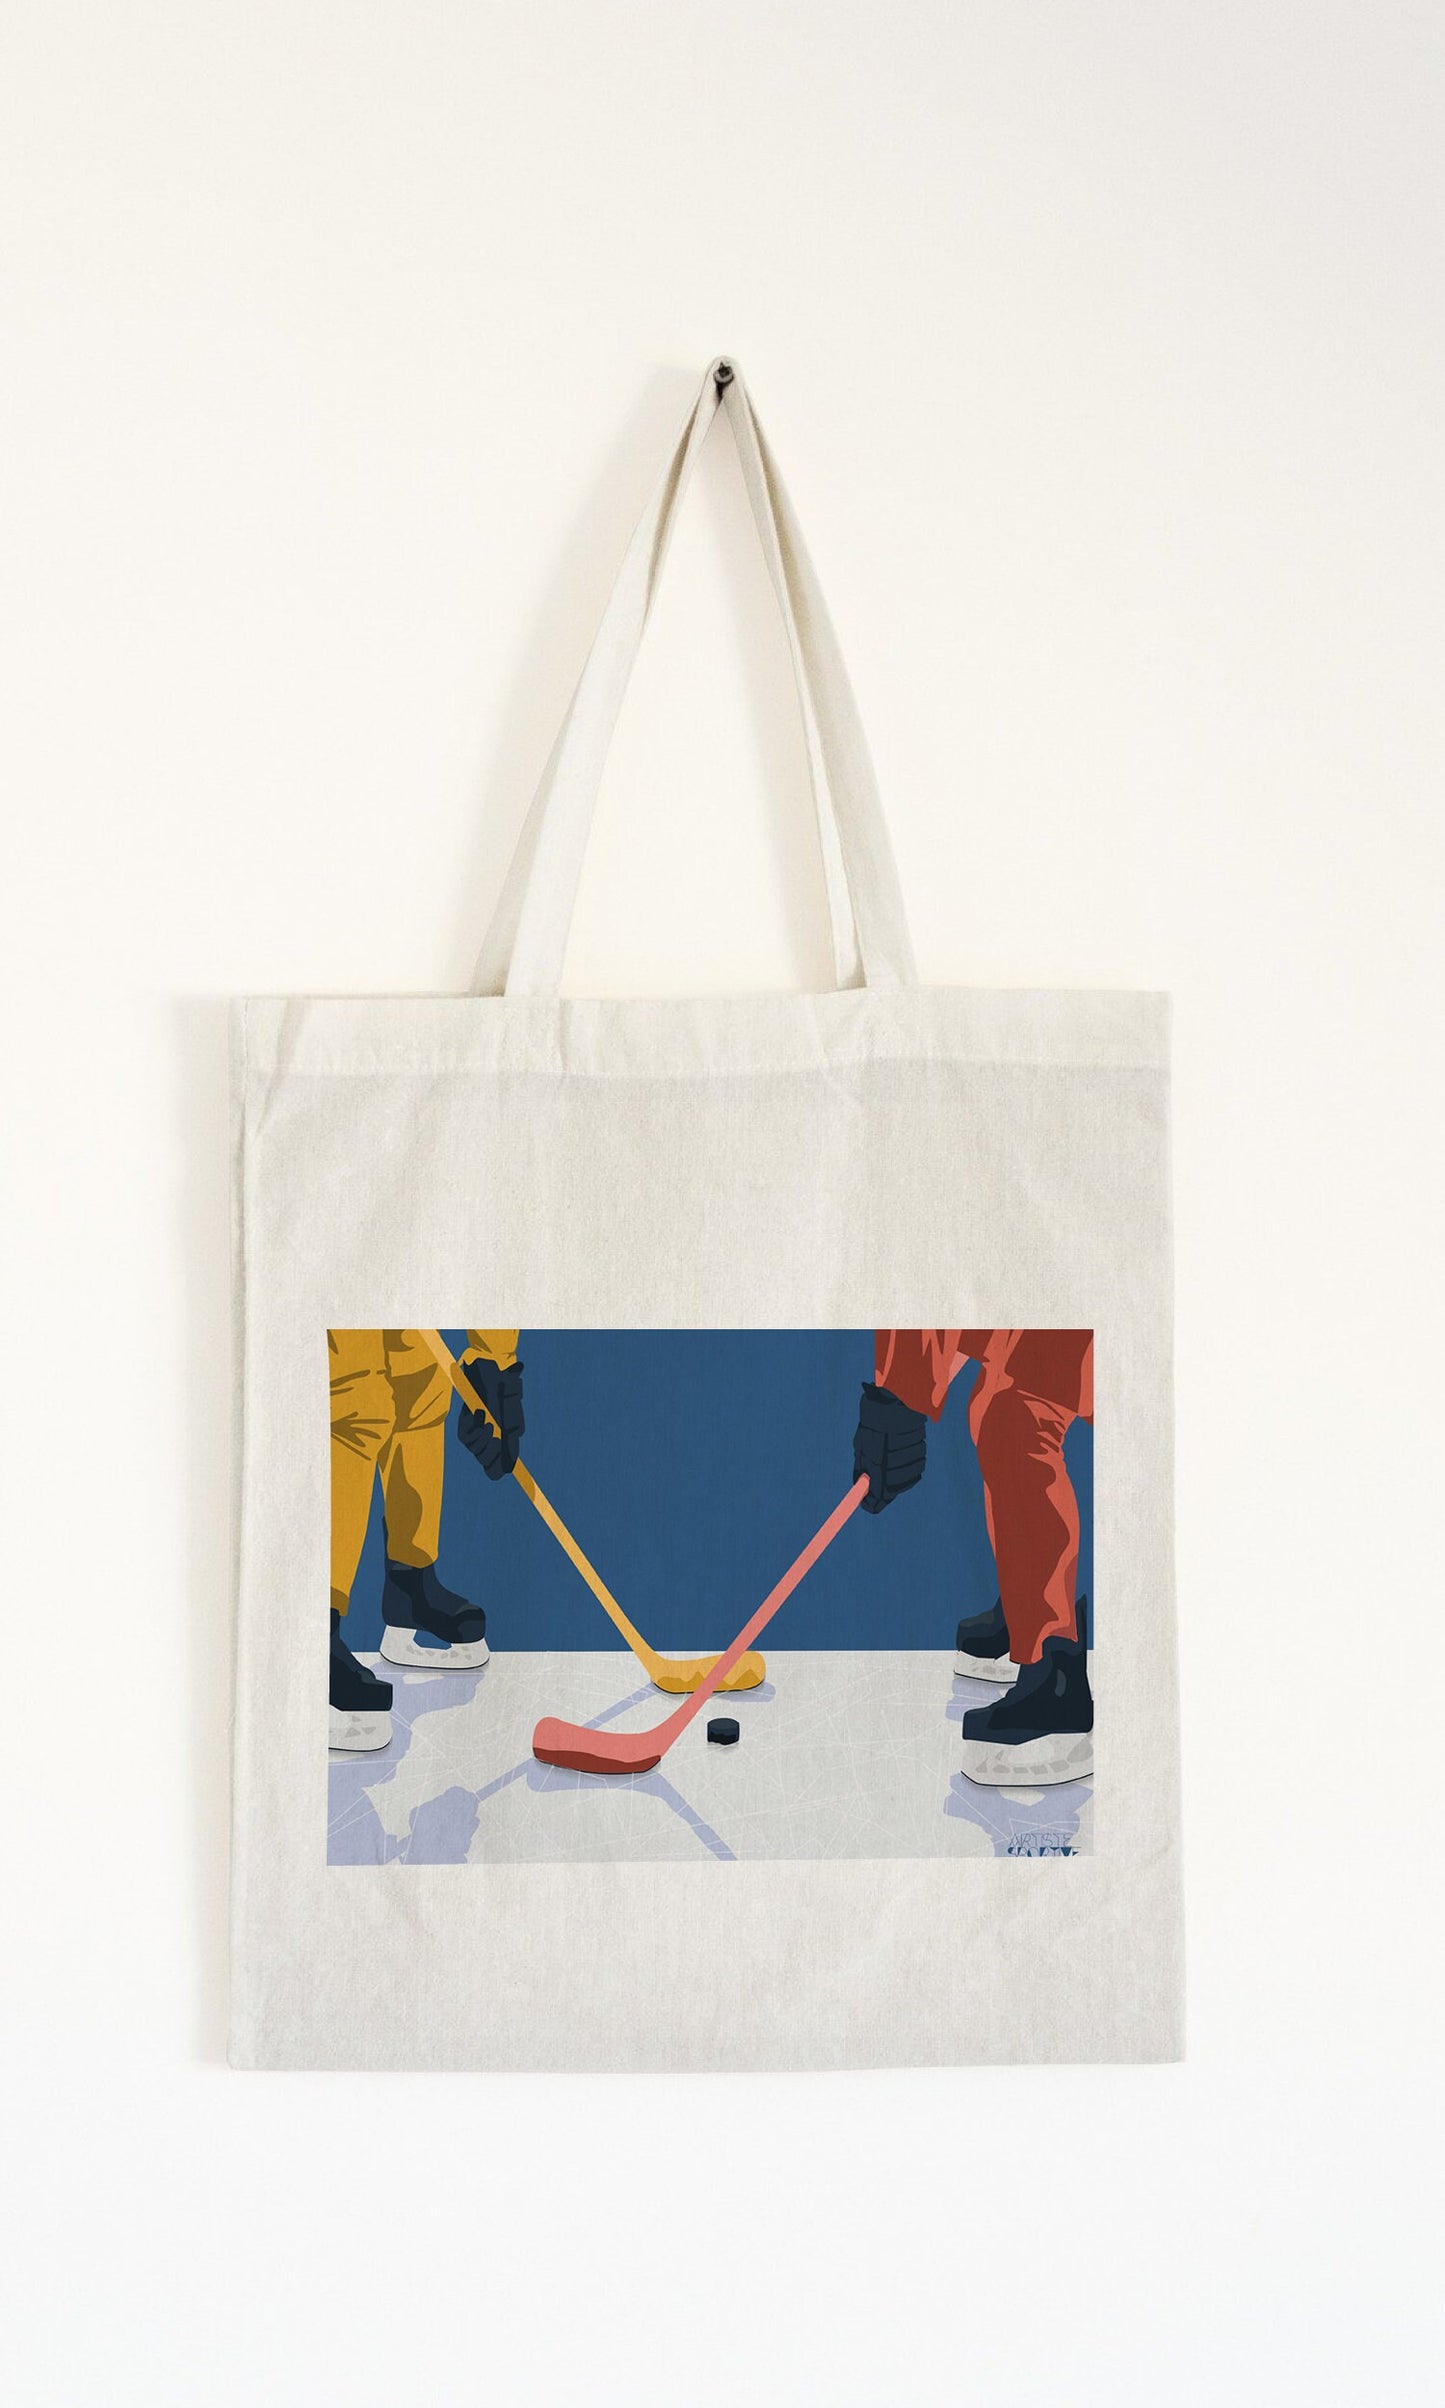 Tote bag or bag “Hockey it slides”